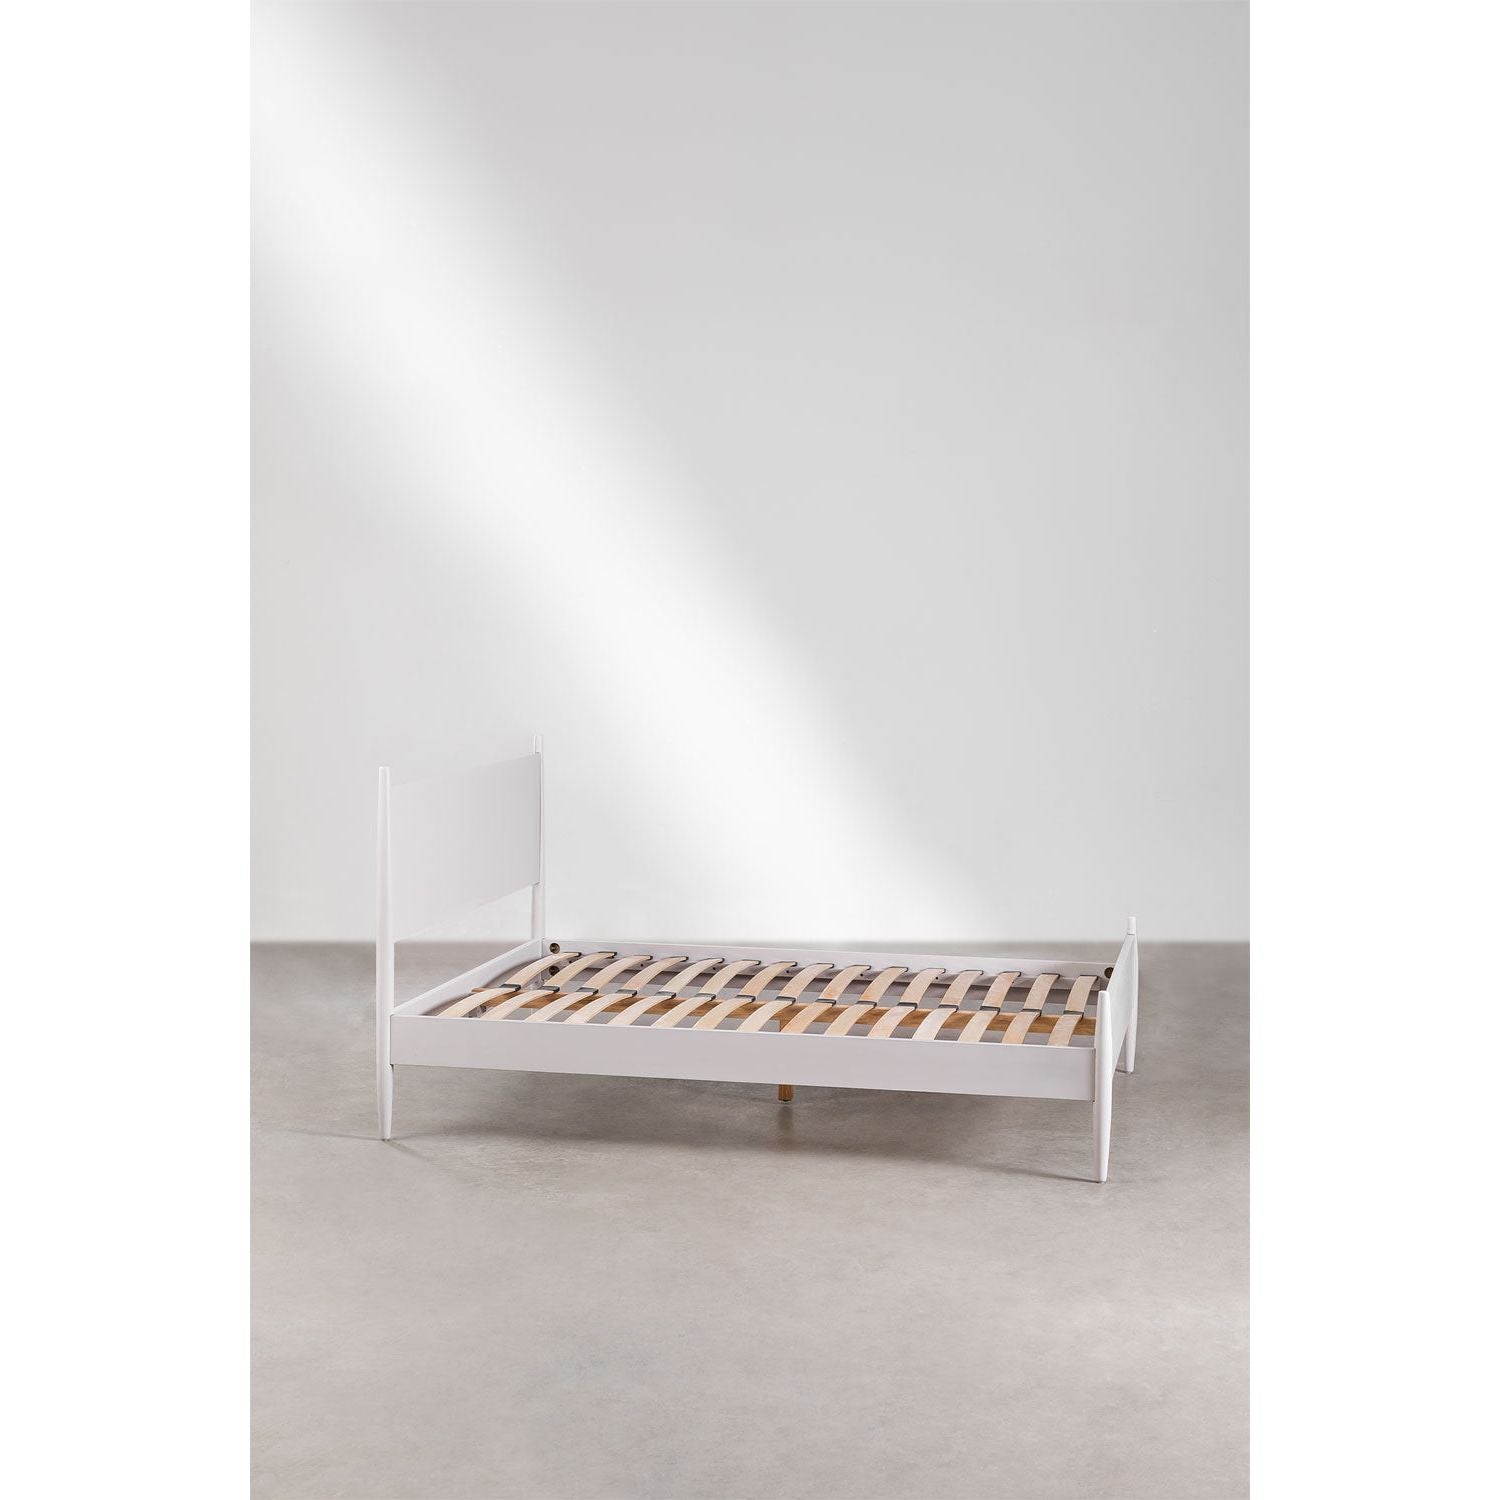 Medinė lova INDIRA, Balta spalva, 160 x 200 cm.